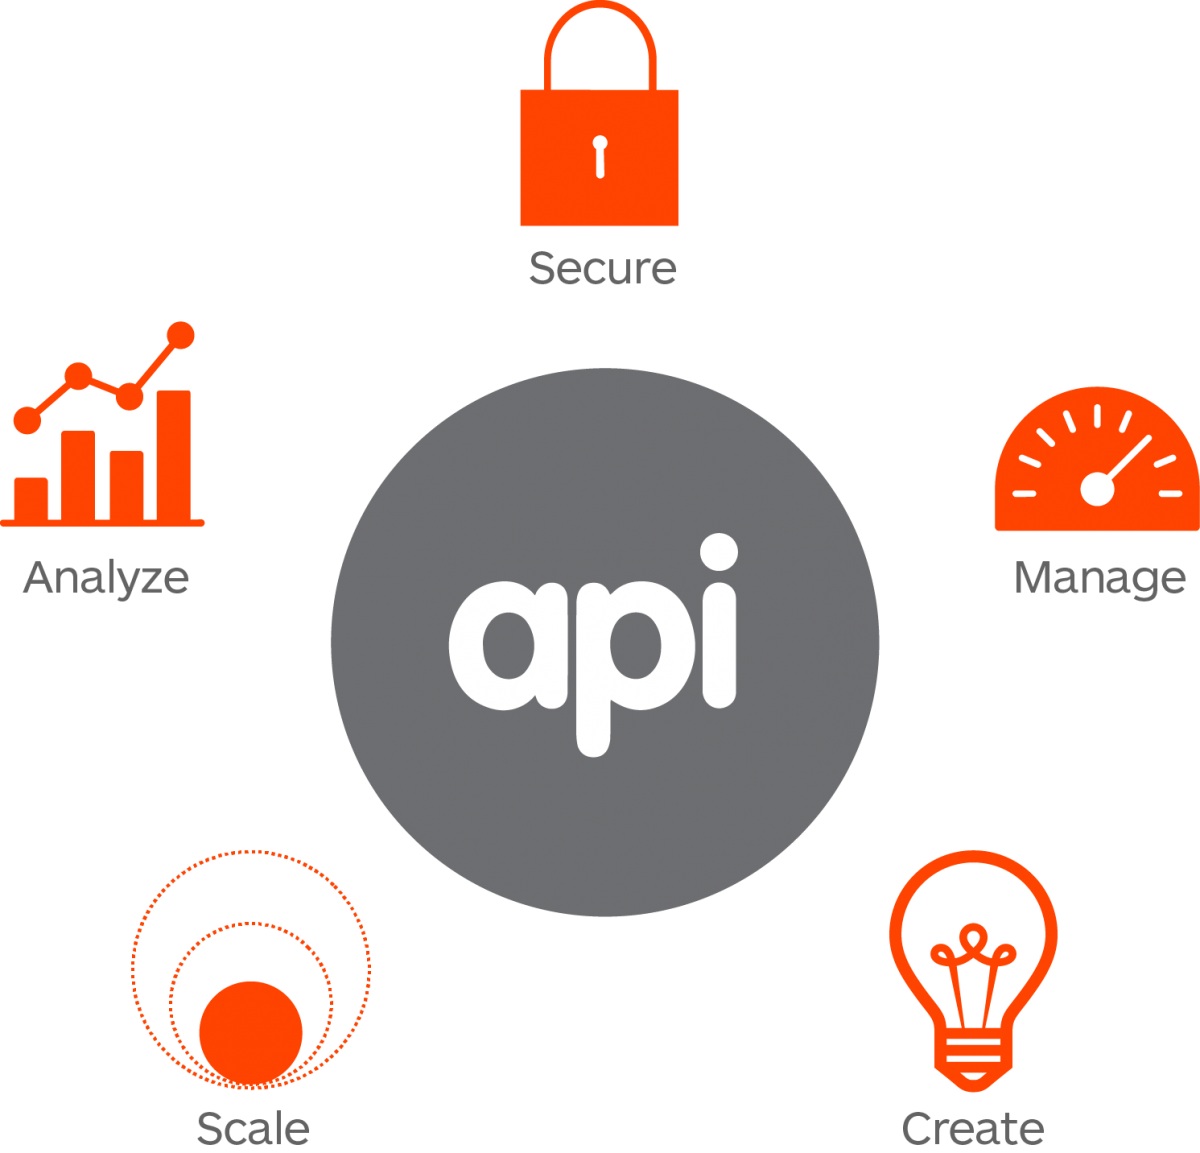 009 - API management using SAP with Bram Keijers - Integration Podcast